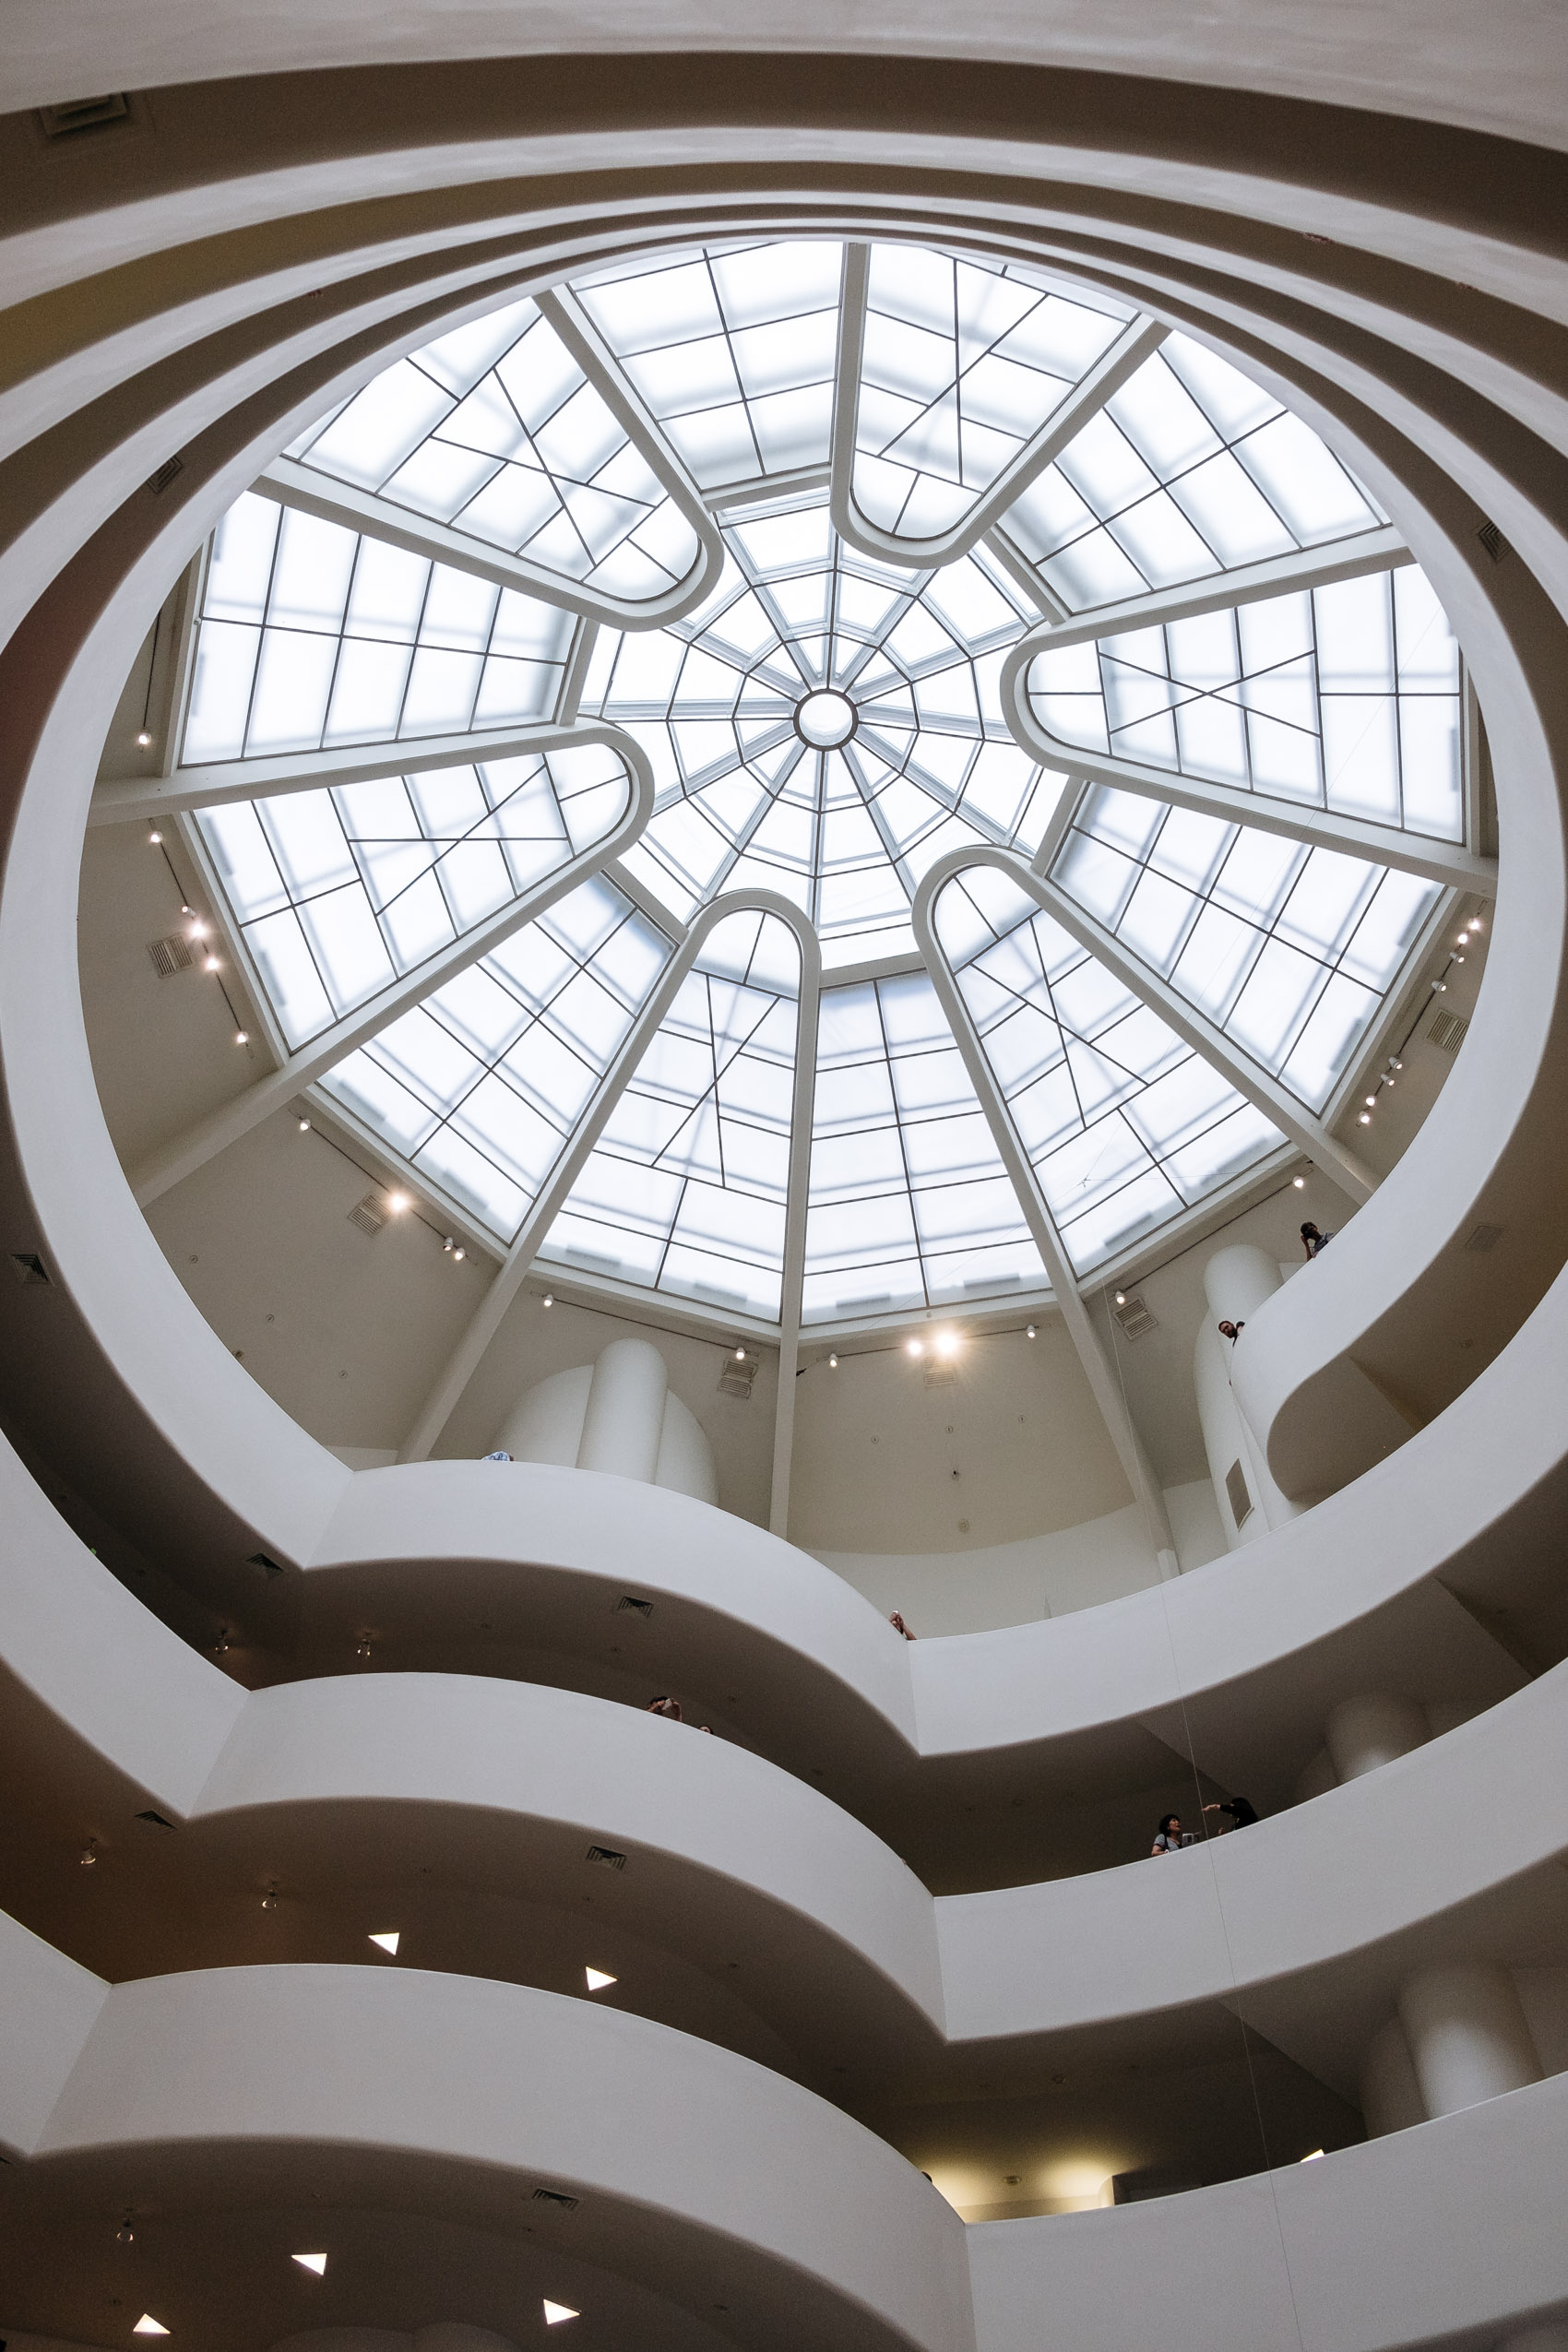 Interior skylight at the Guggenheim Museum in New York